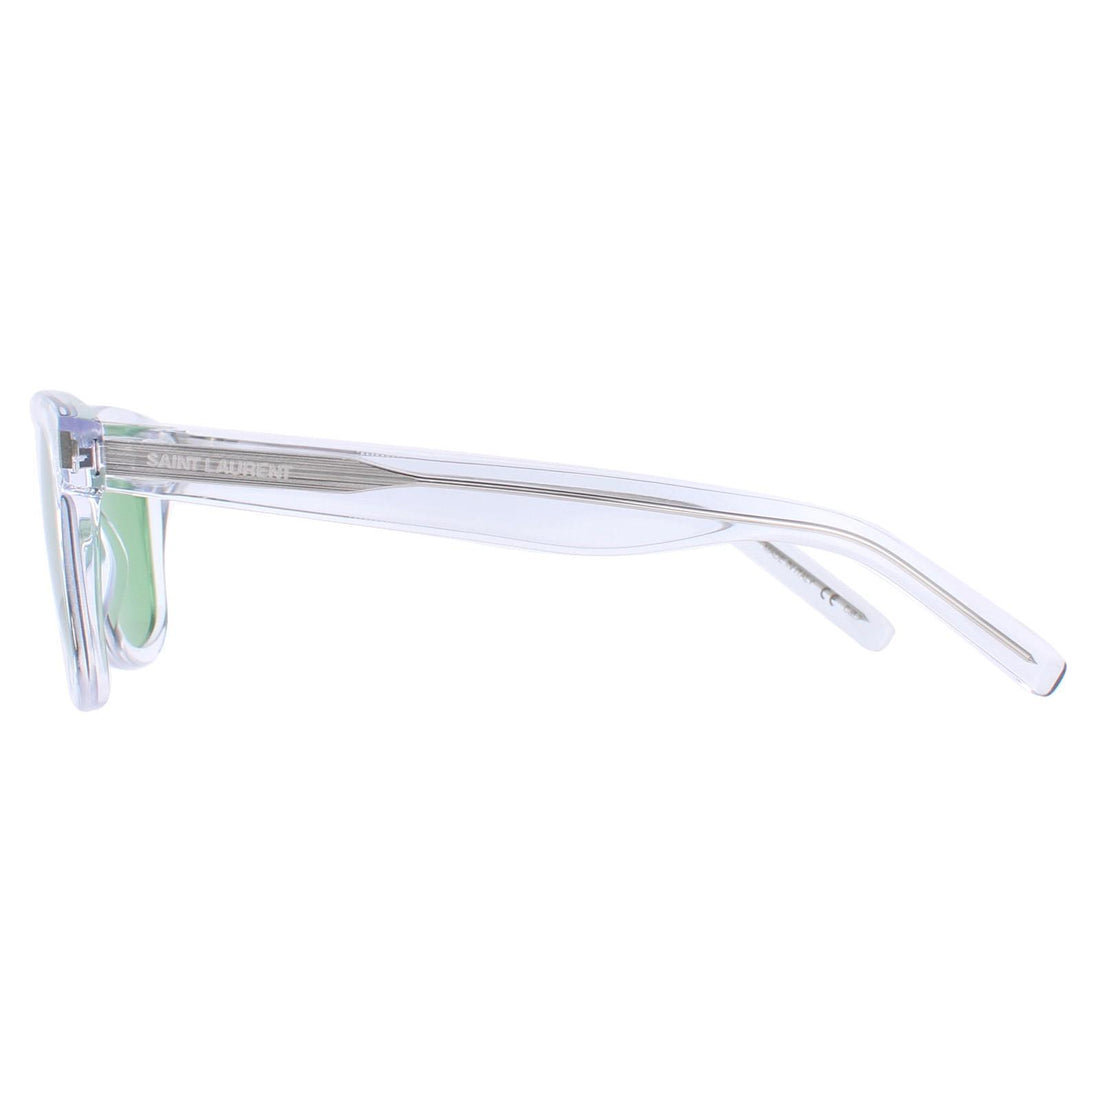 Saint Laurent Sunglasses CLASSIS SL 51 064 Shiny Transparent Crystal Solid Flag Green